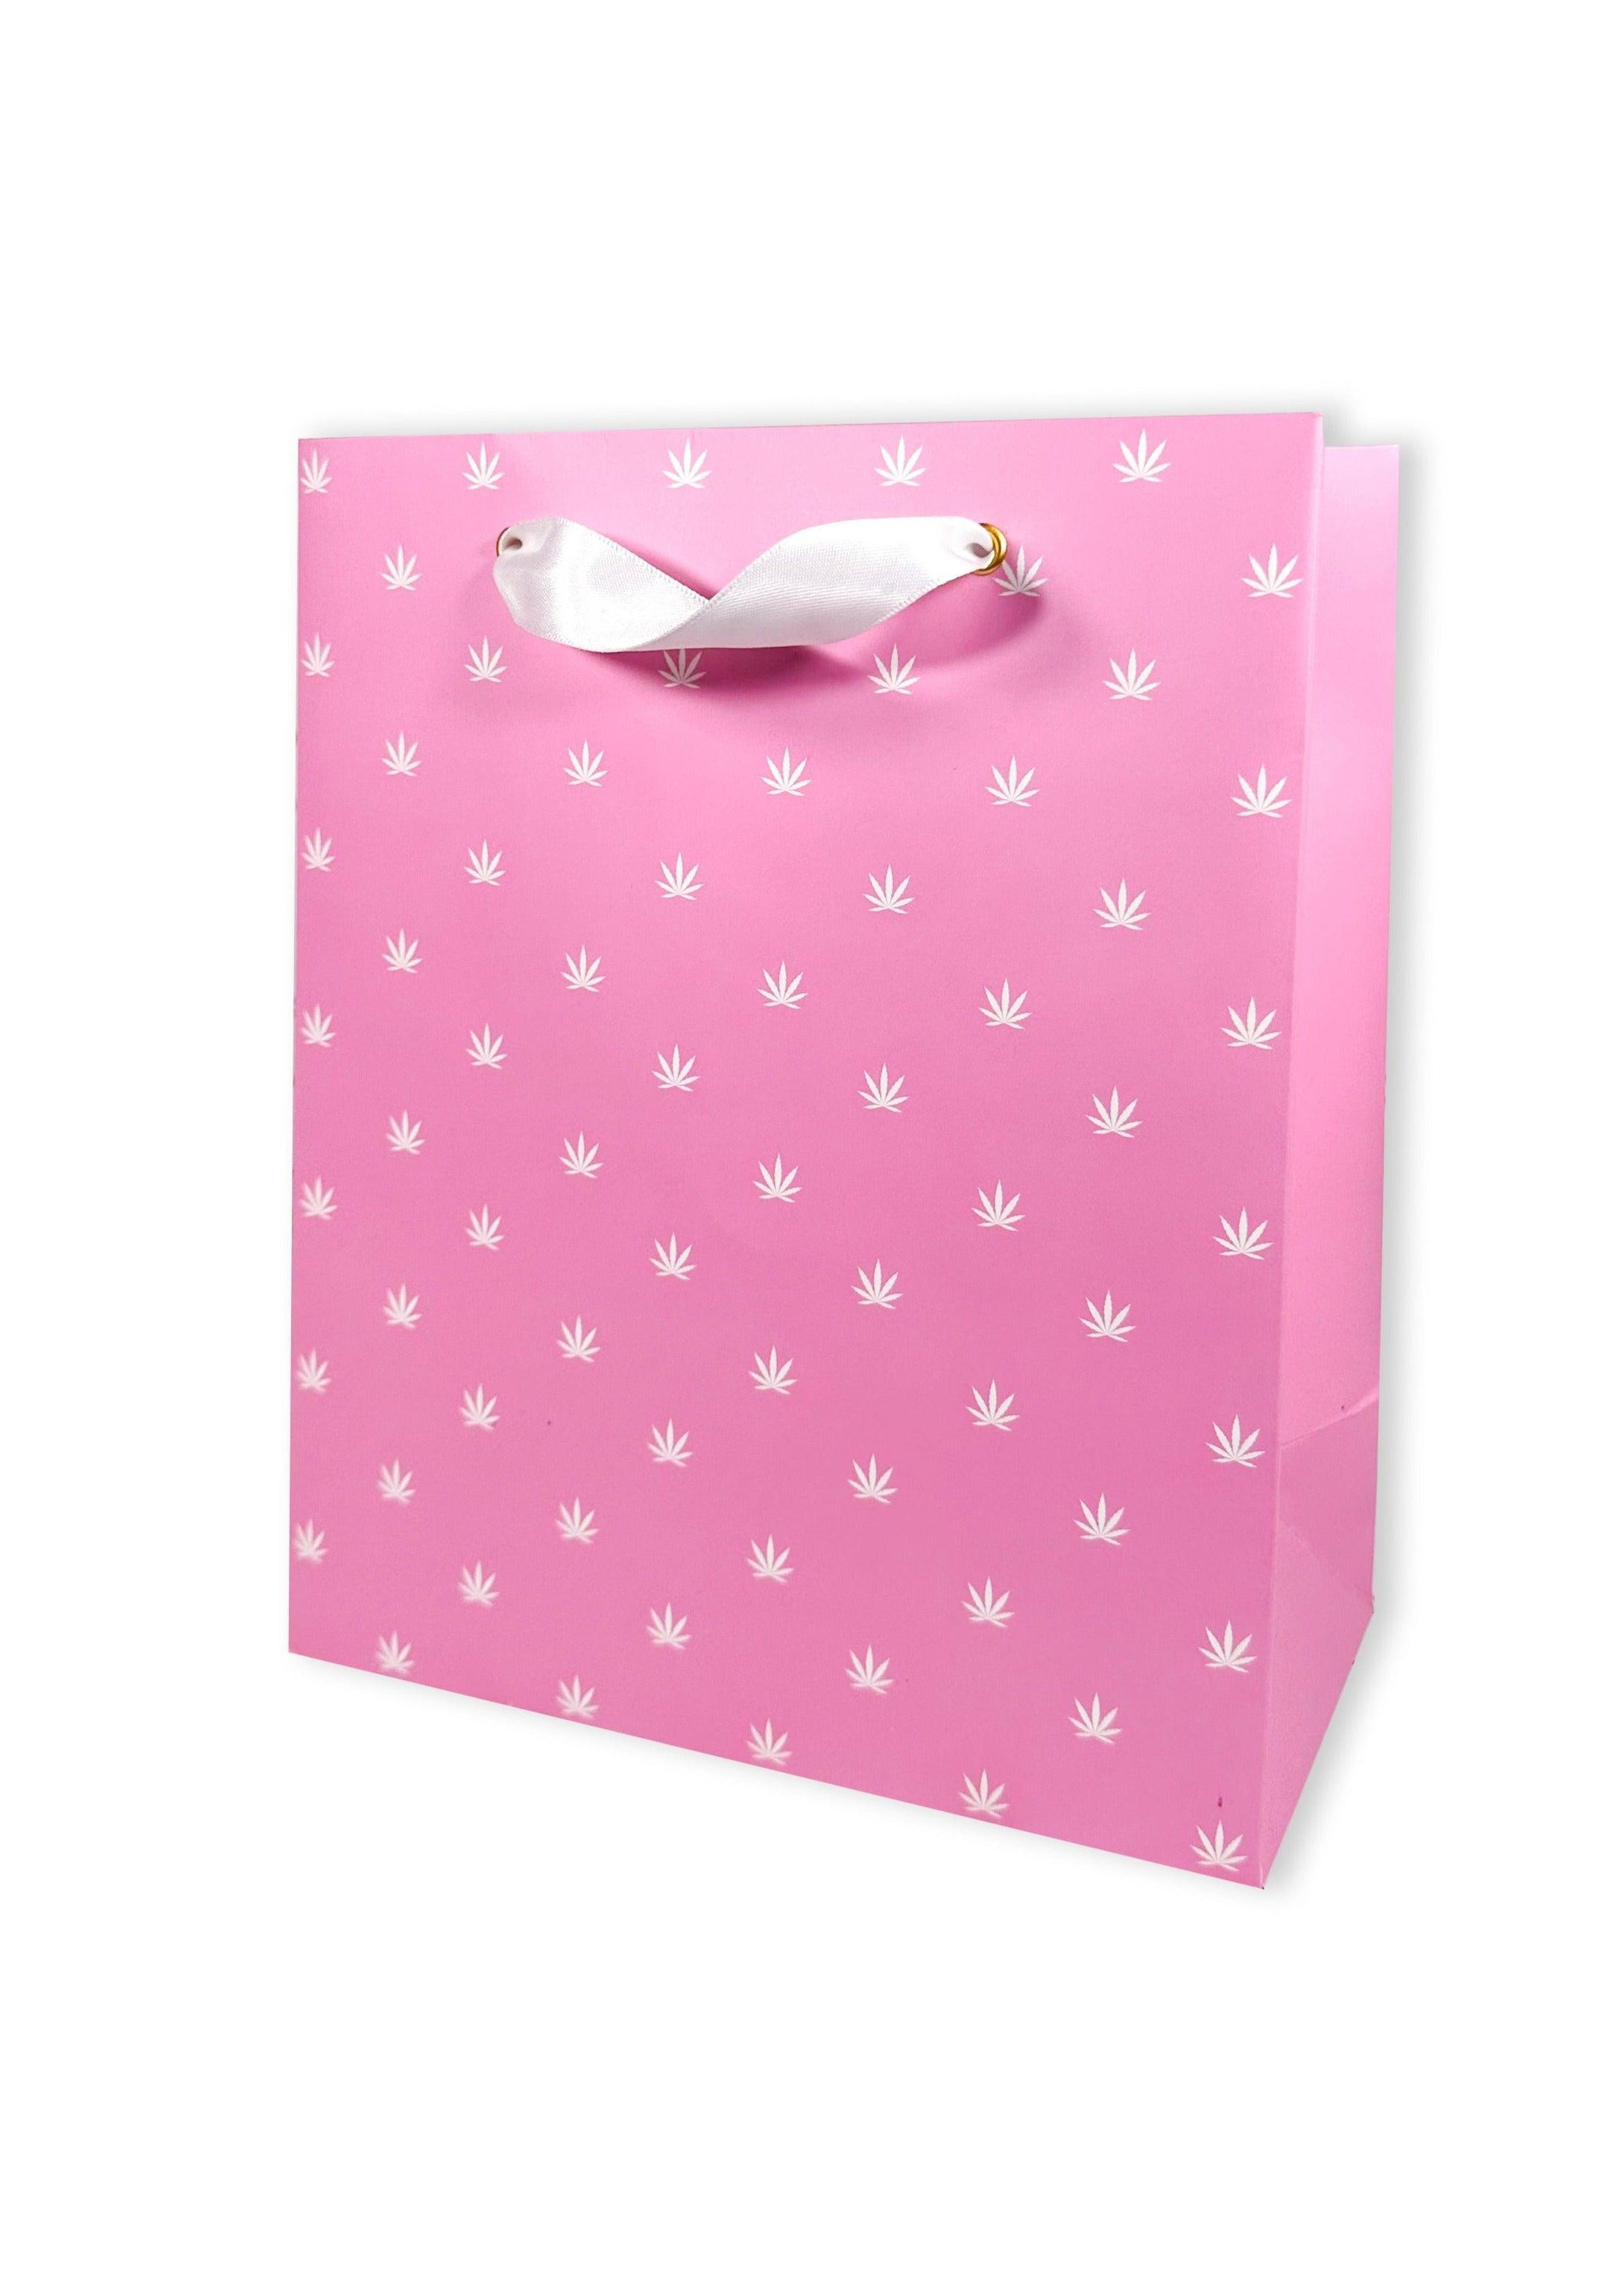 Polka Pot Gift Bag - Pink/White